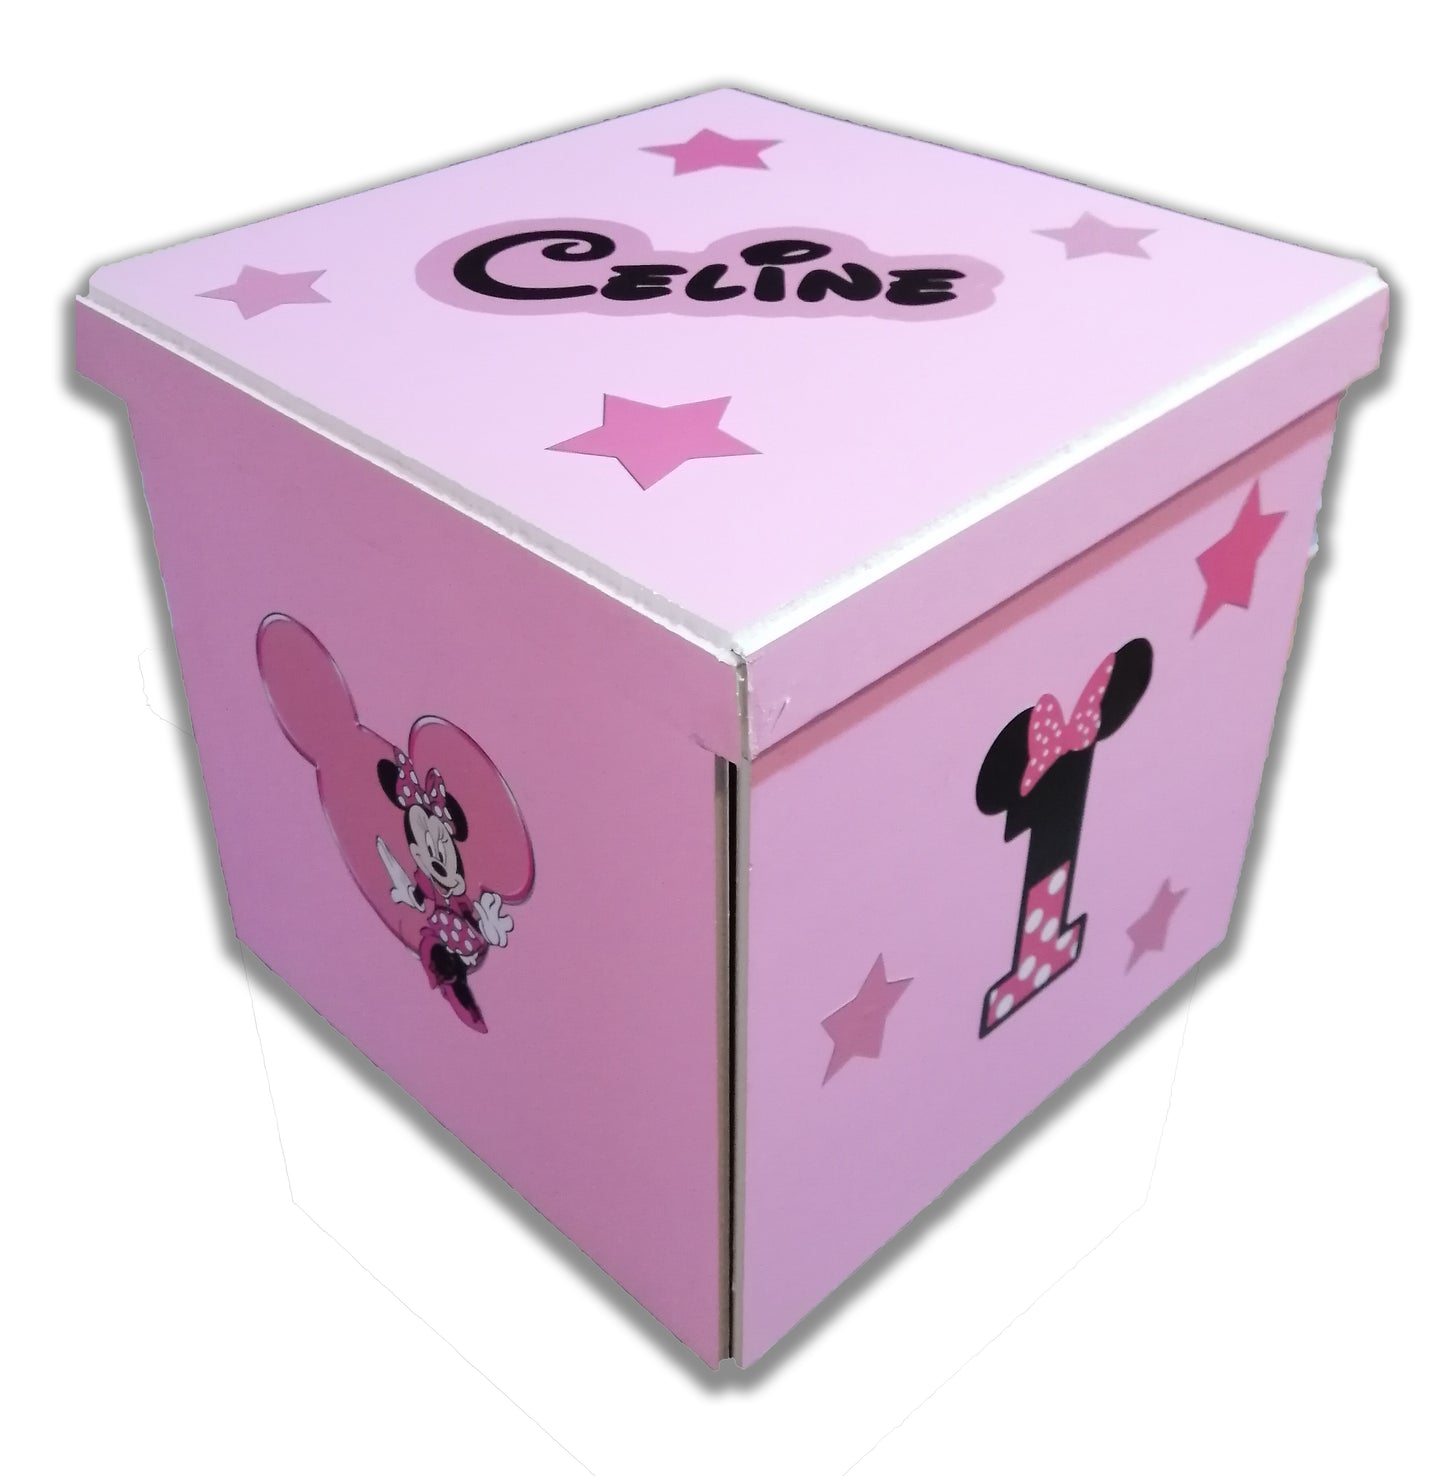 Cardboard cake expolsion box